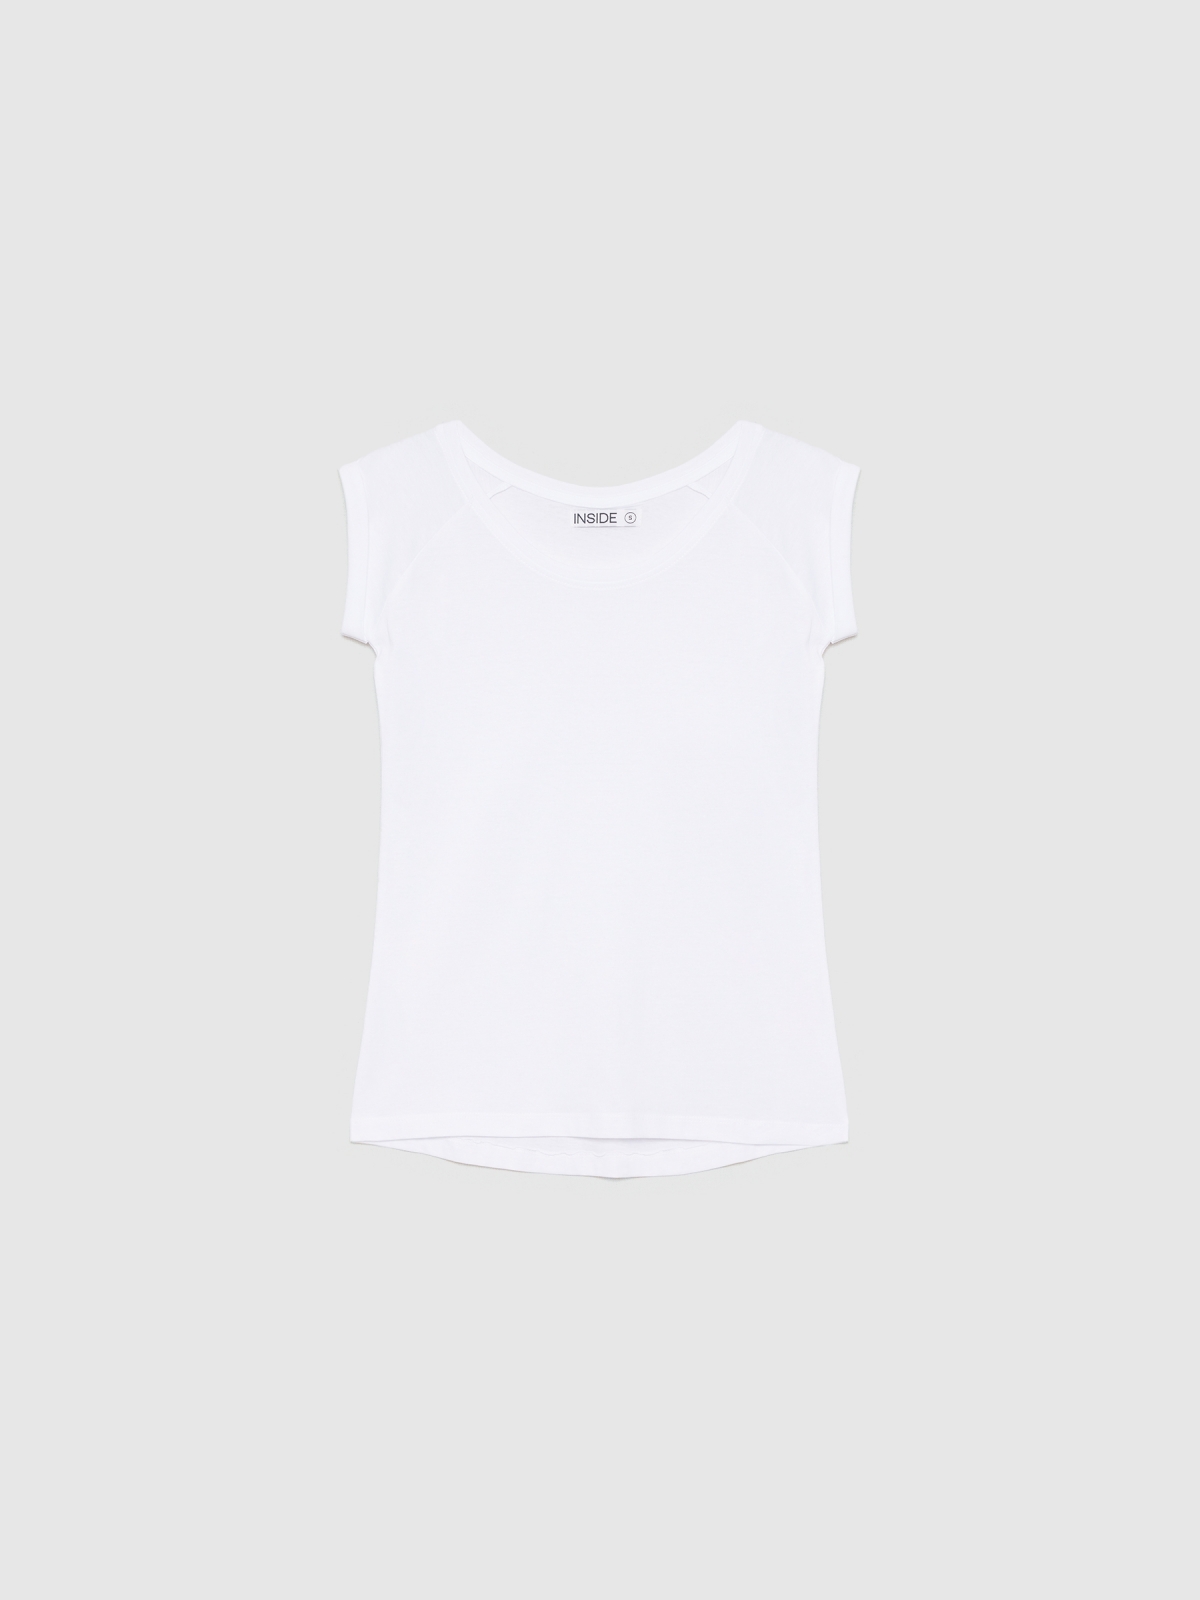  T-shirt básica manga curta branco